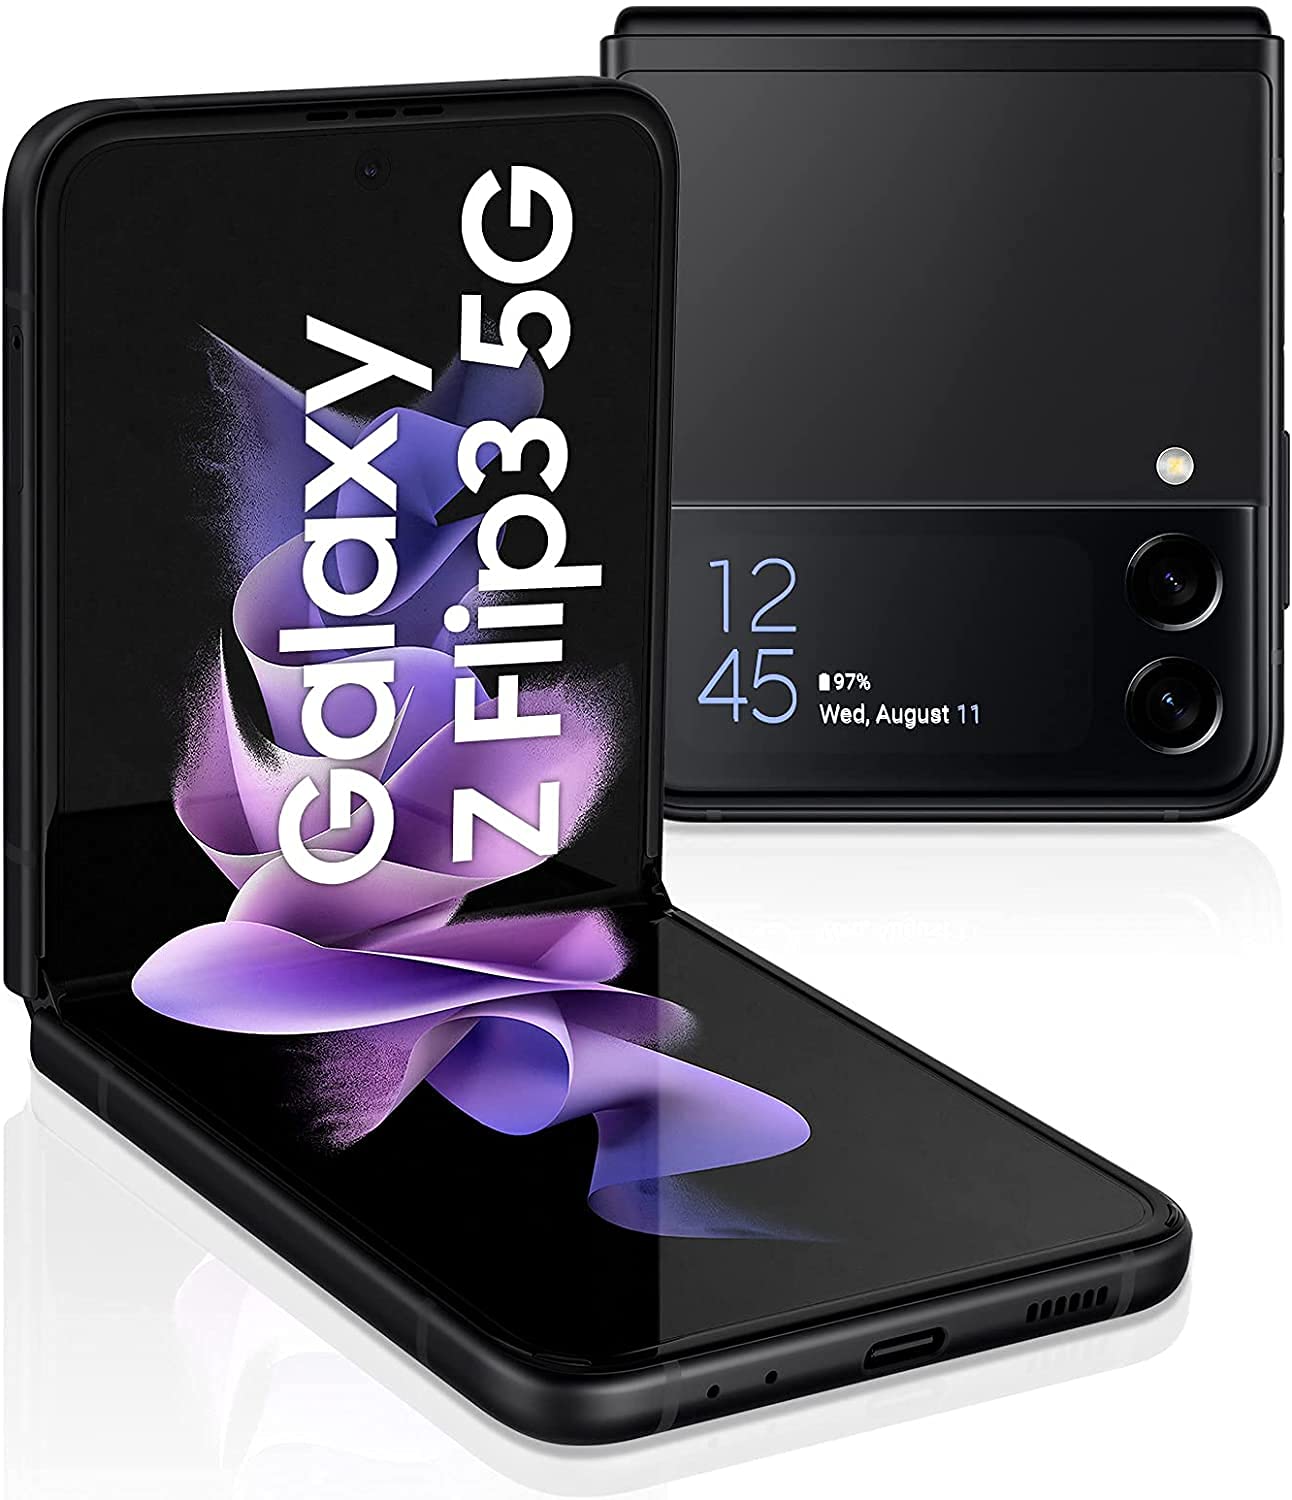 Samsung Galaxy Z Flip3 5G Smartphone Sim Free Android Folding phone 128GB Black (UK Version)